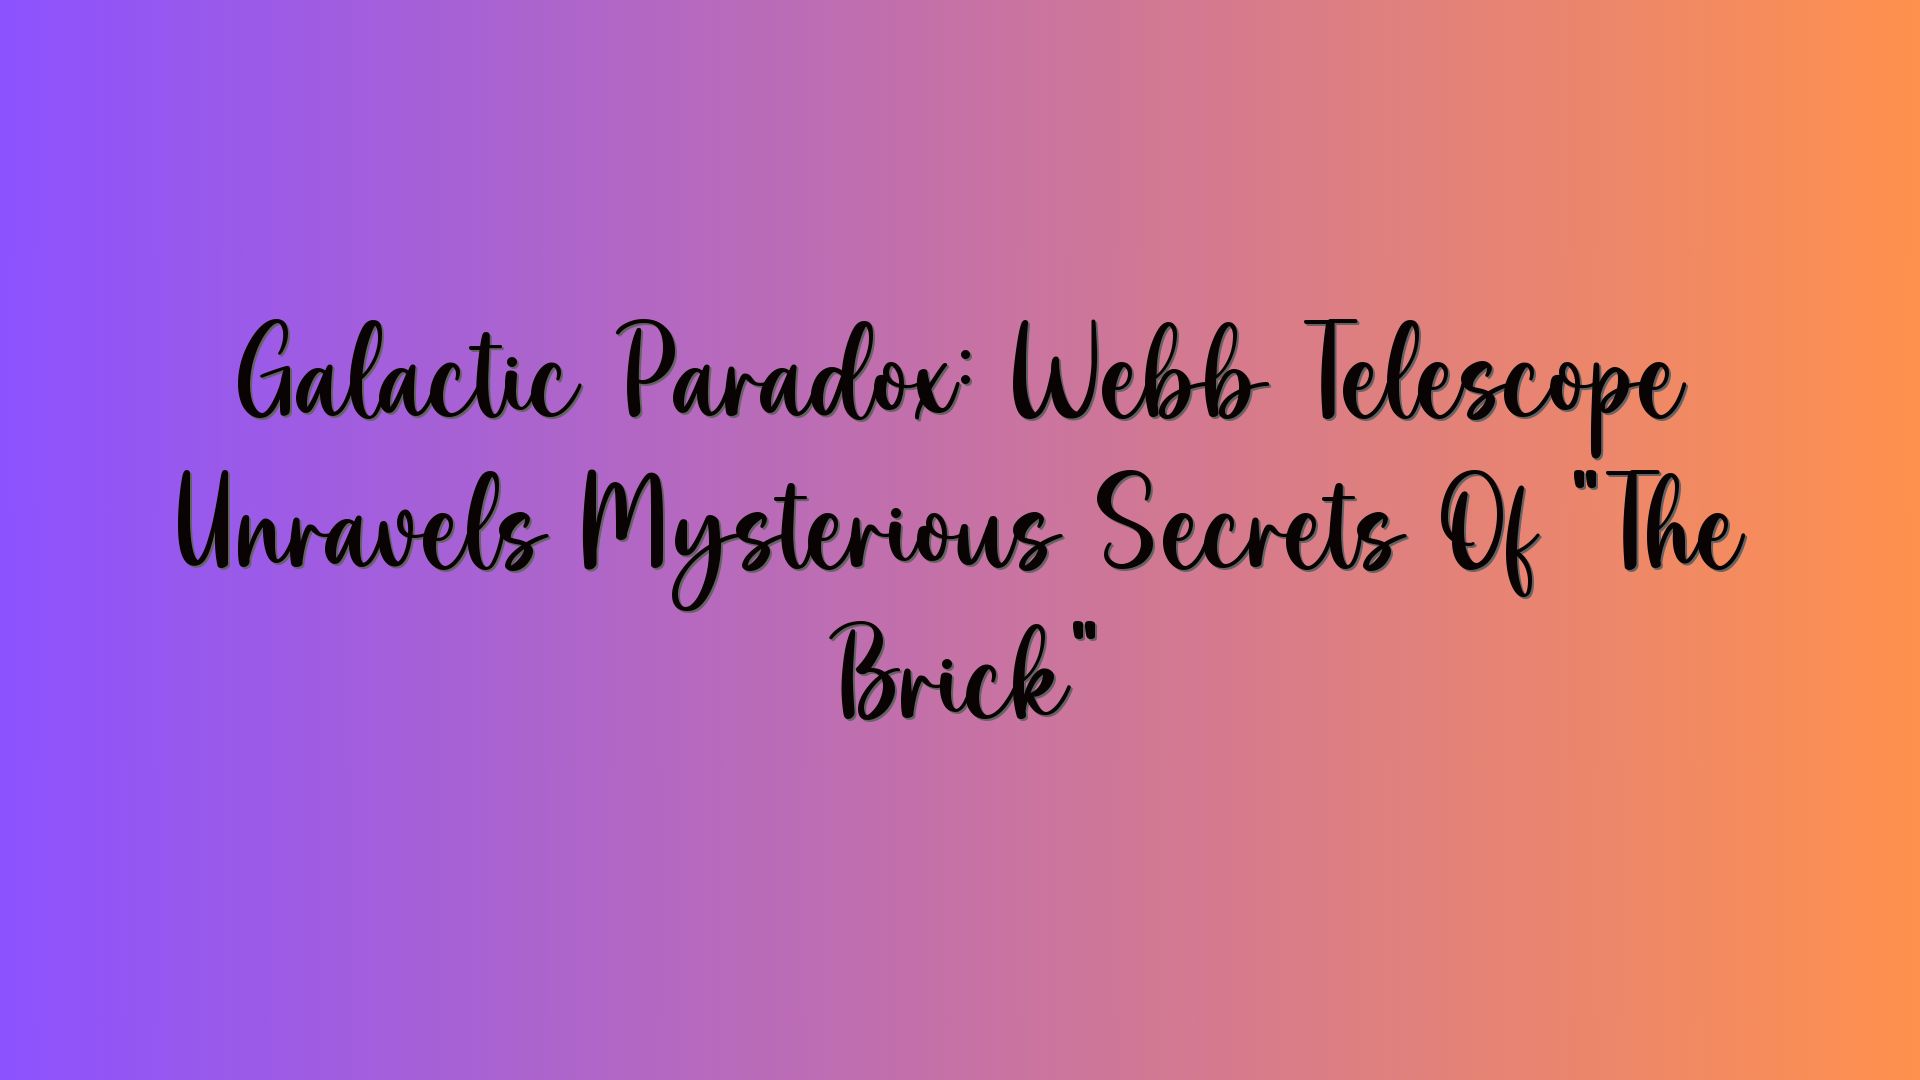 Galactic Paradox: Webb Telescope Unravels Mysterious Secrets Of “The Brick”